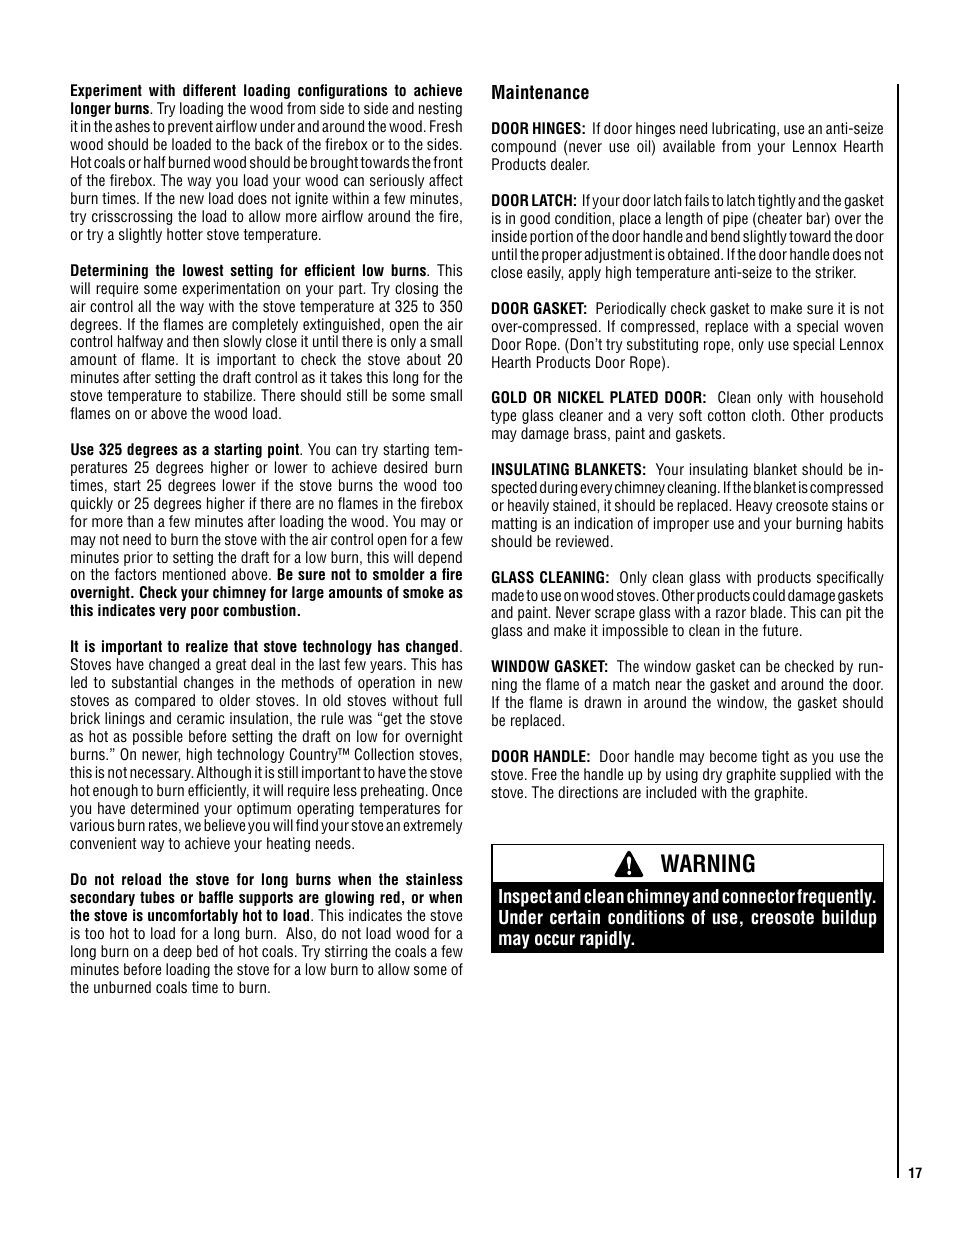 Warning | LG MODEL STRIKER S160 User Manual | Page 17 / 22